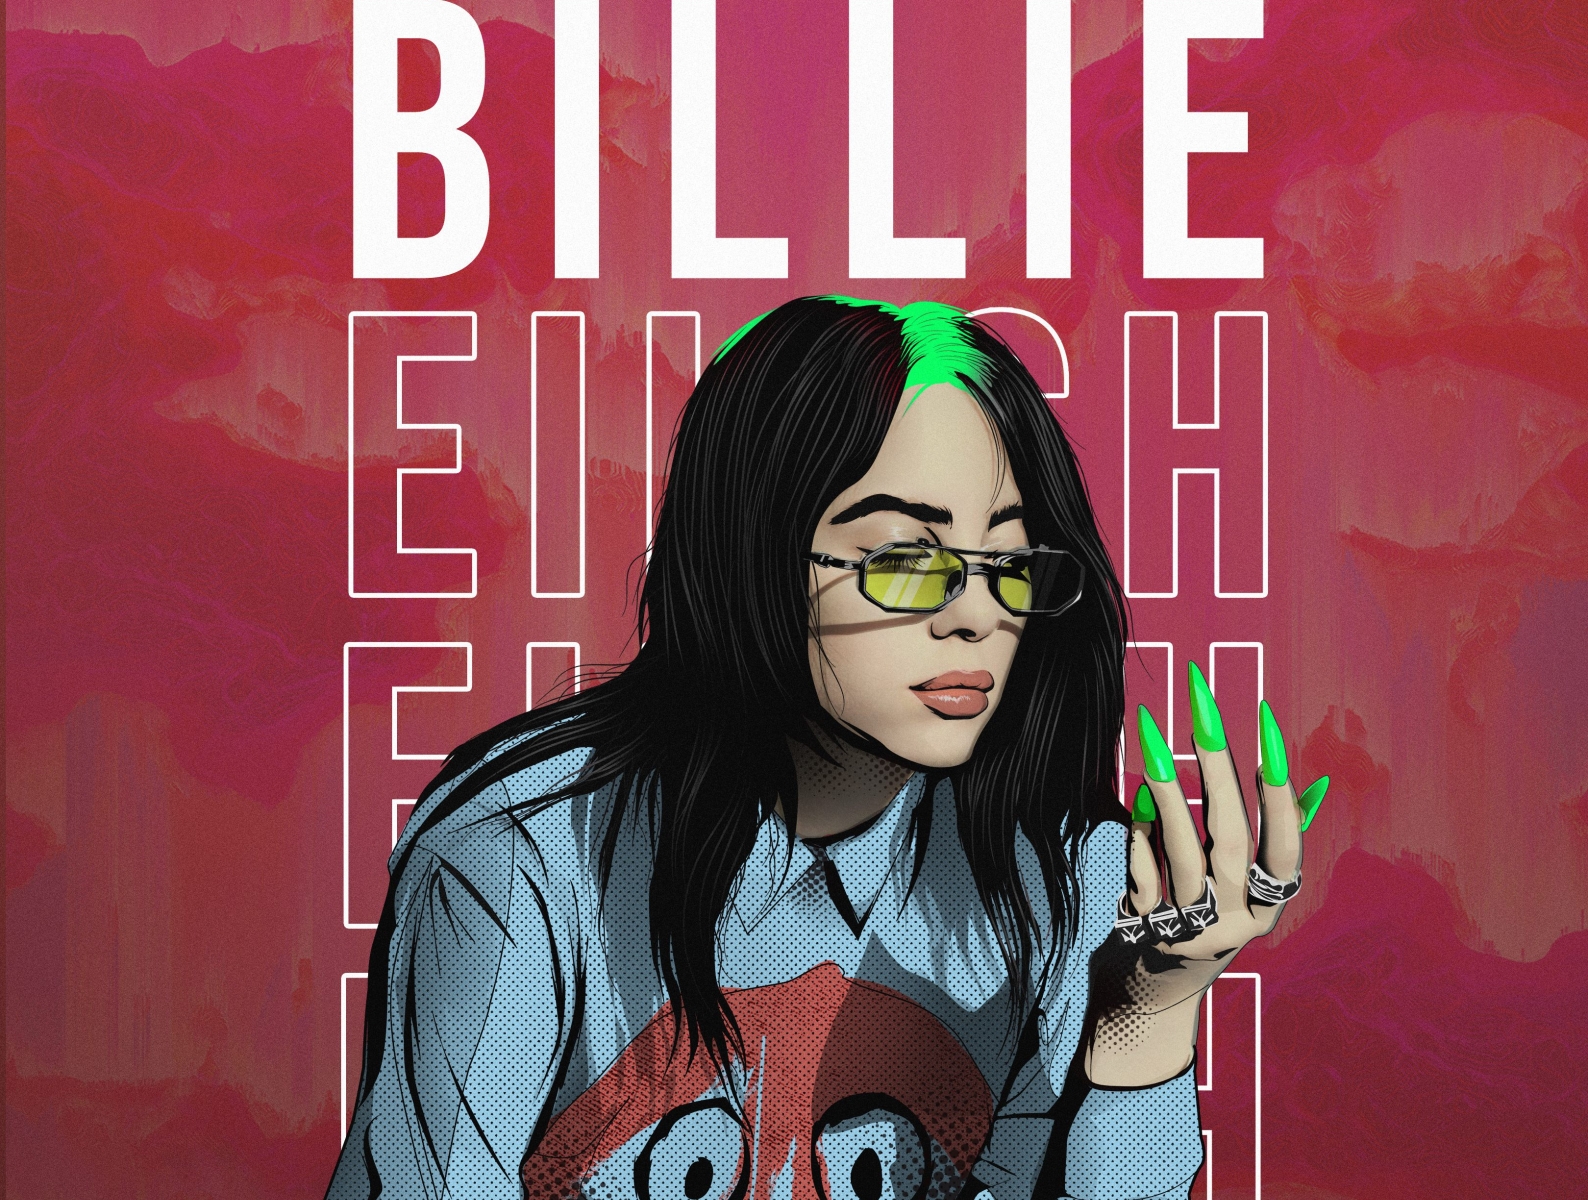 Billie Eilish by ASWIN K on Dribbble